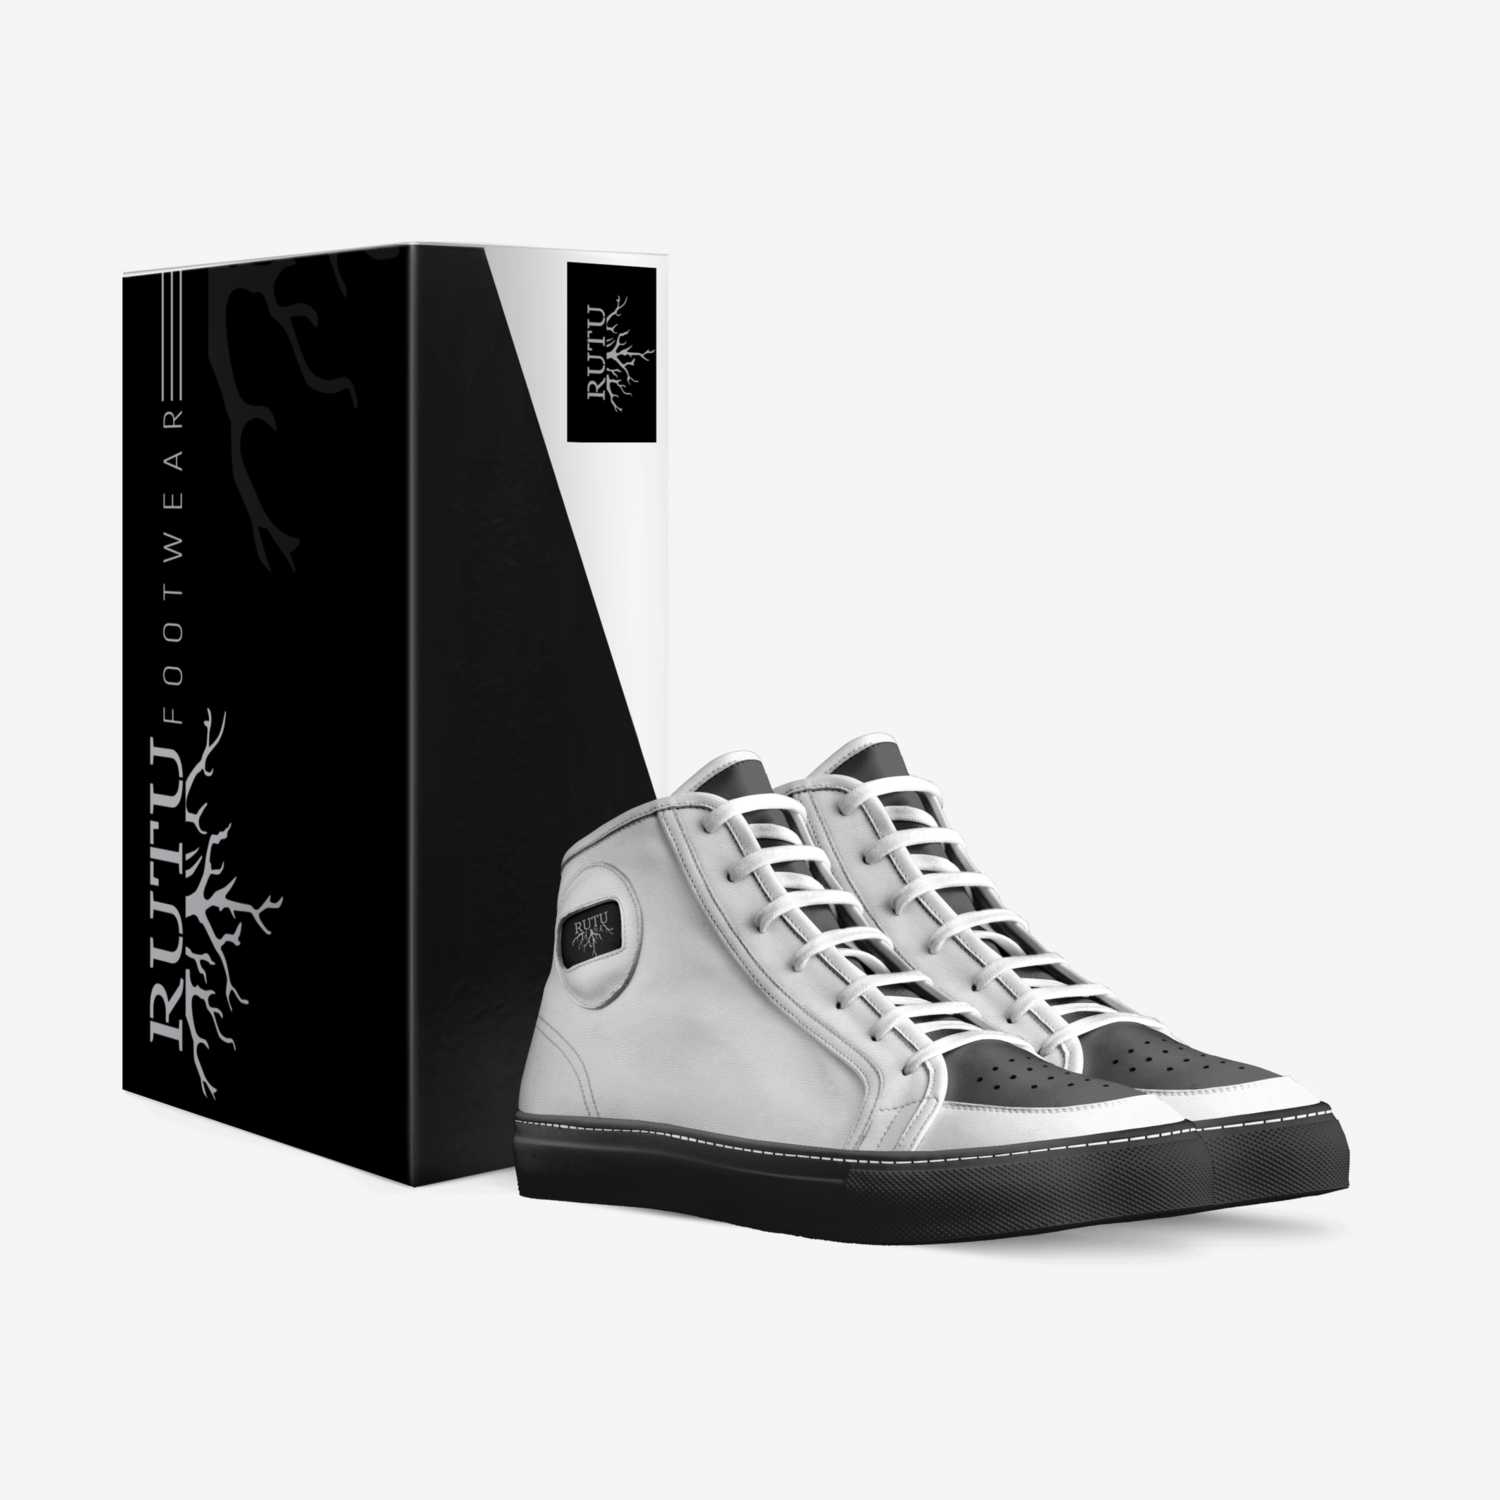 RUTU FOOTWEAR custom made in Italy shoes by Jordi Delchot | Box view